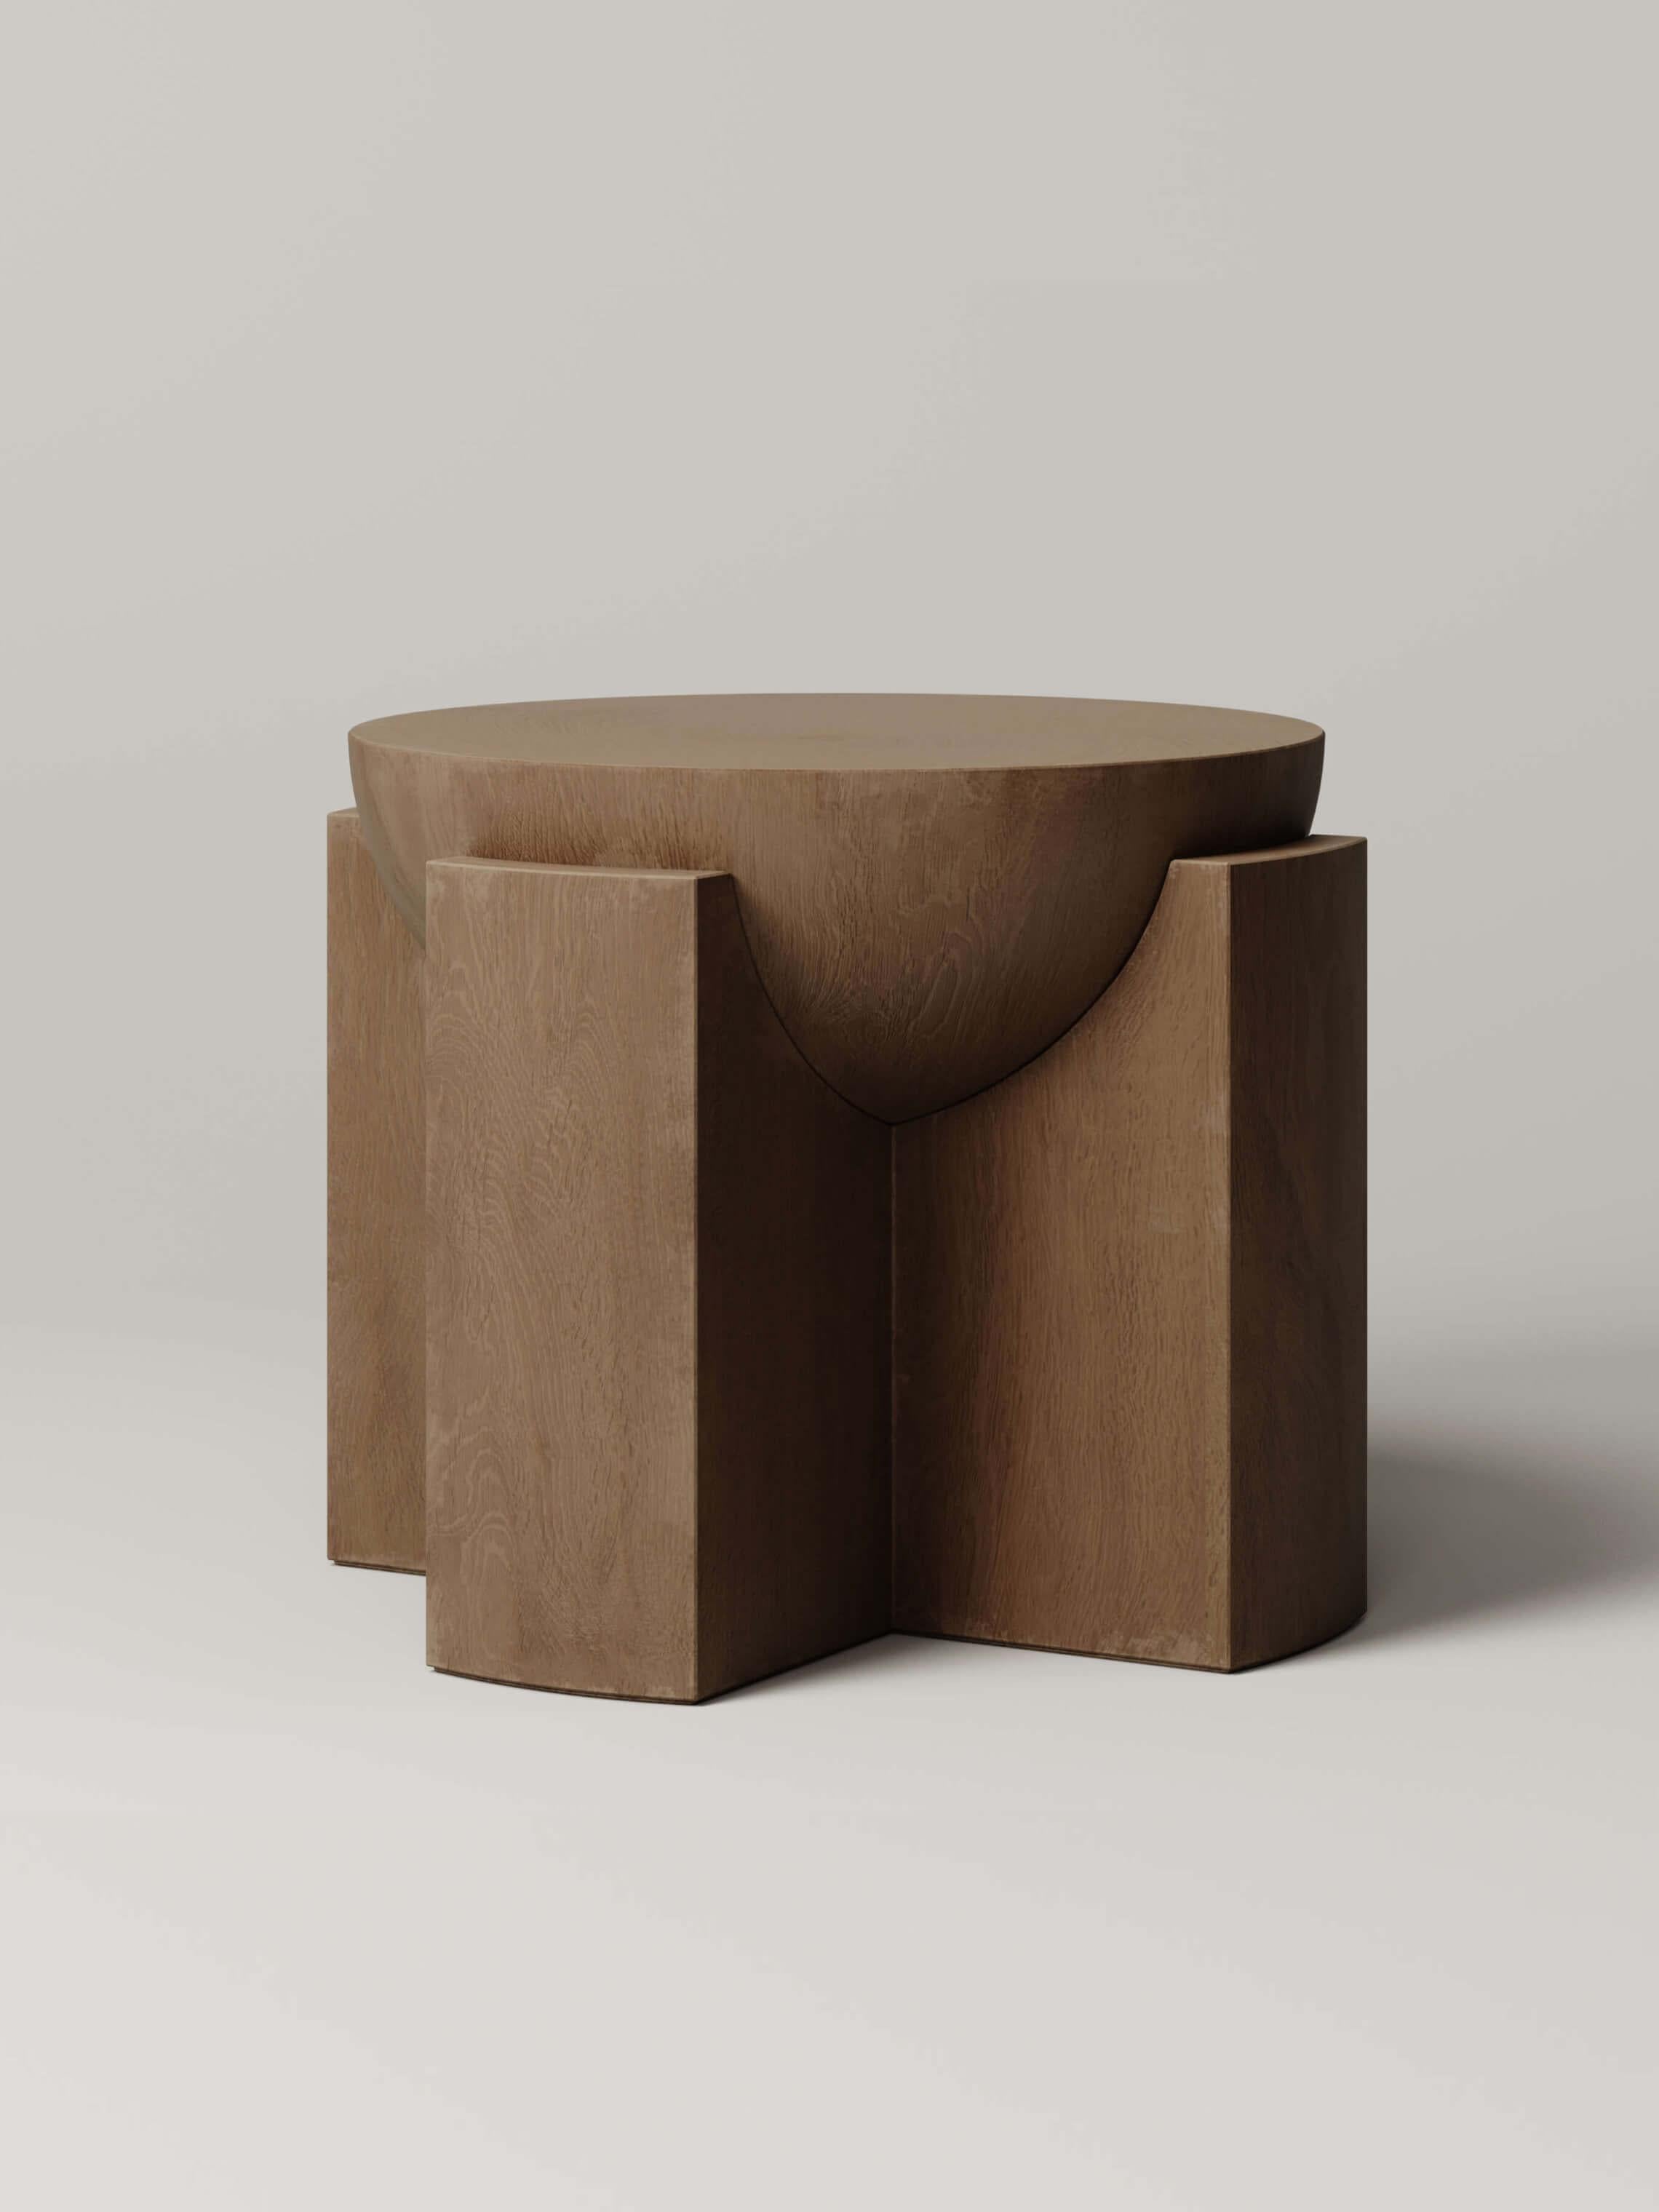 Contemporary M_002 Side Table designed by Studio Le Cann for Monolith Studio, Lava Rock For Sale